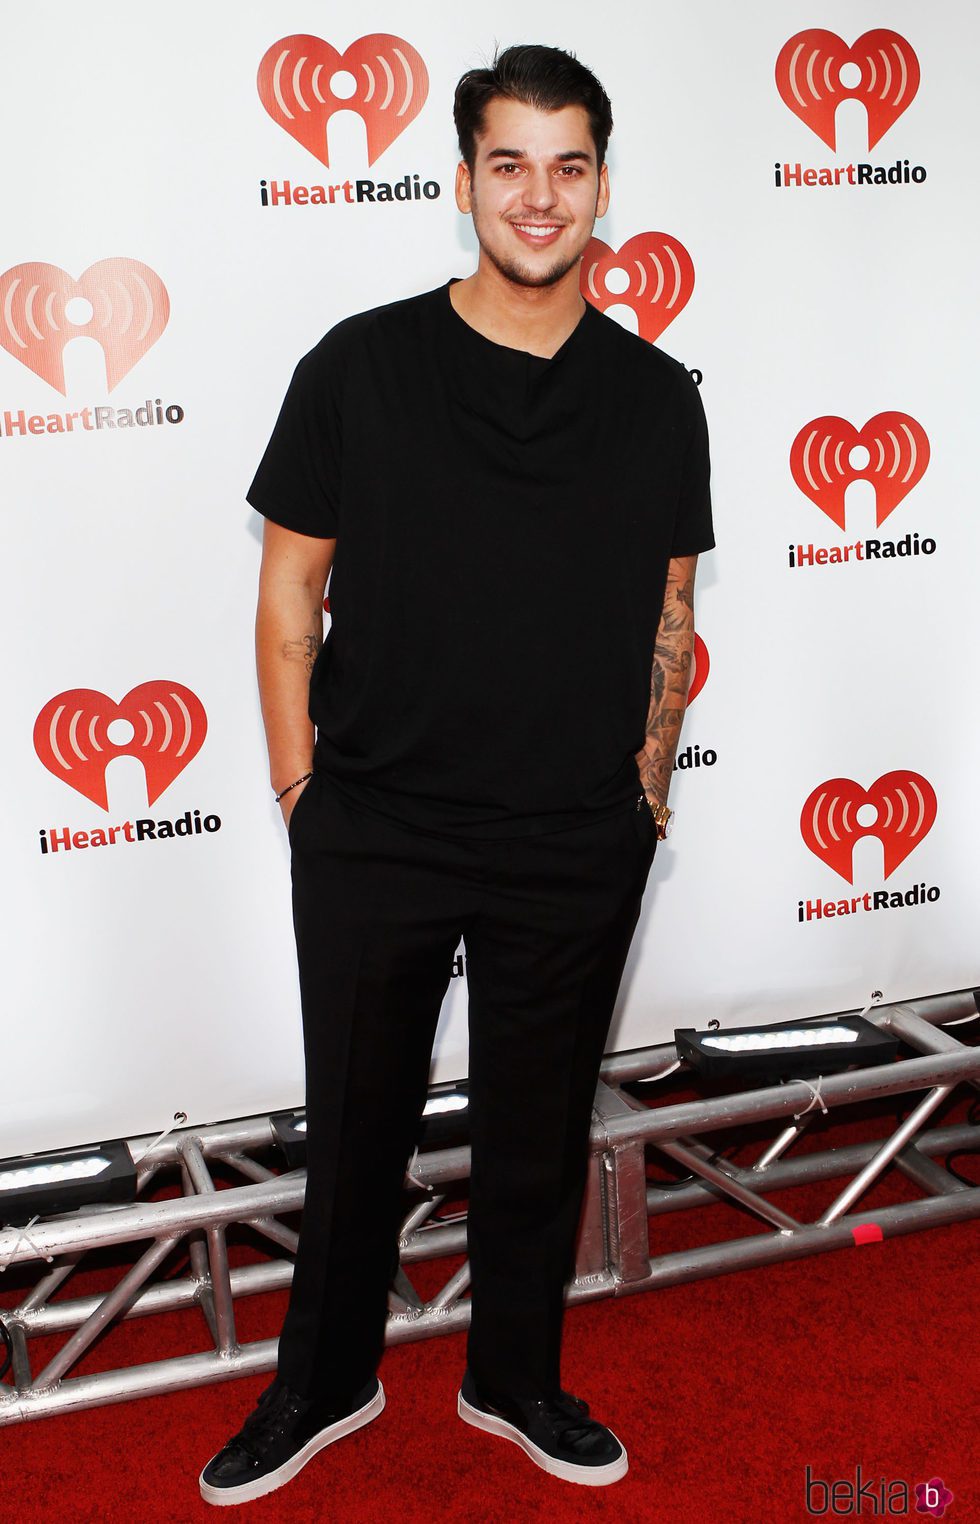 Robert Kardashian Jr. en la alfombra roja del Festival iHeartRadio